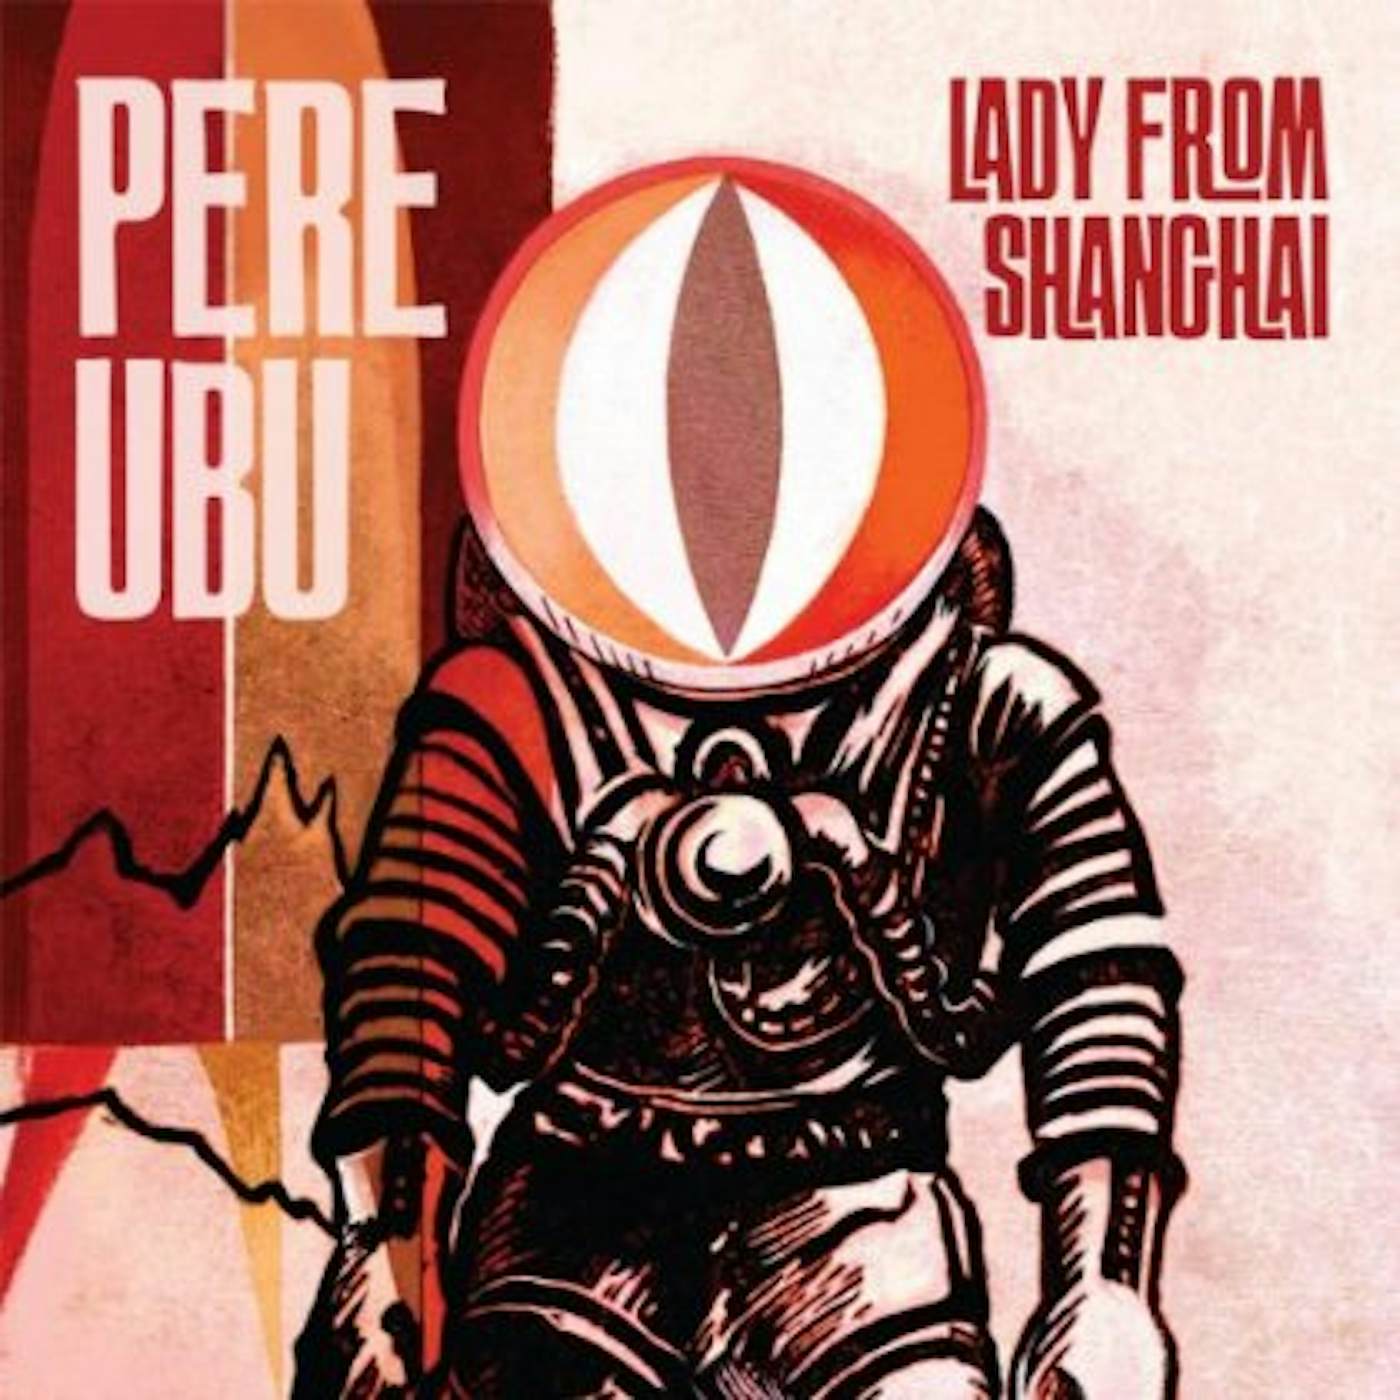 Pere Ubu LADY FROM SHANGHAI CD